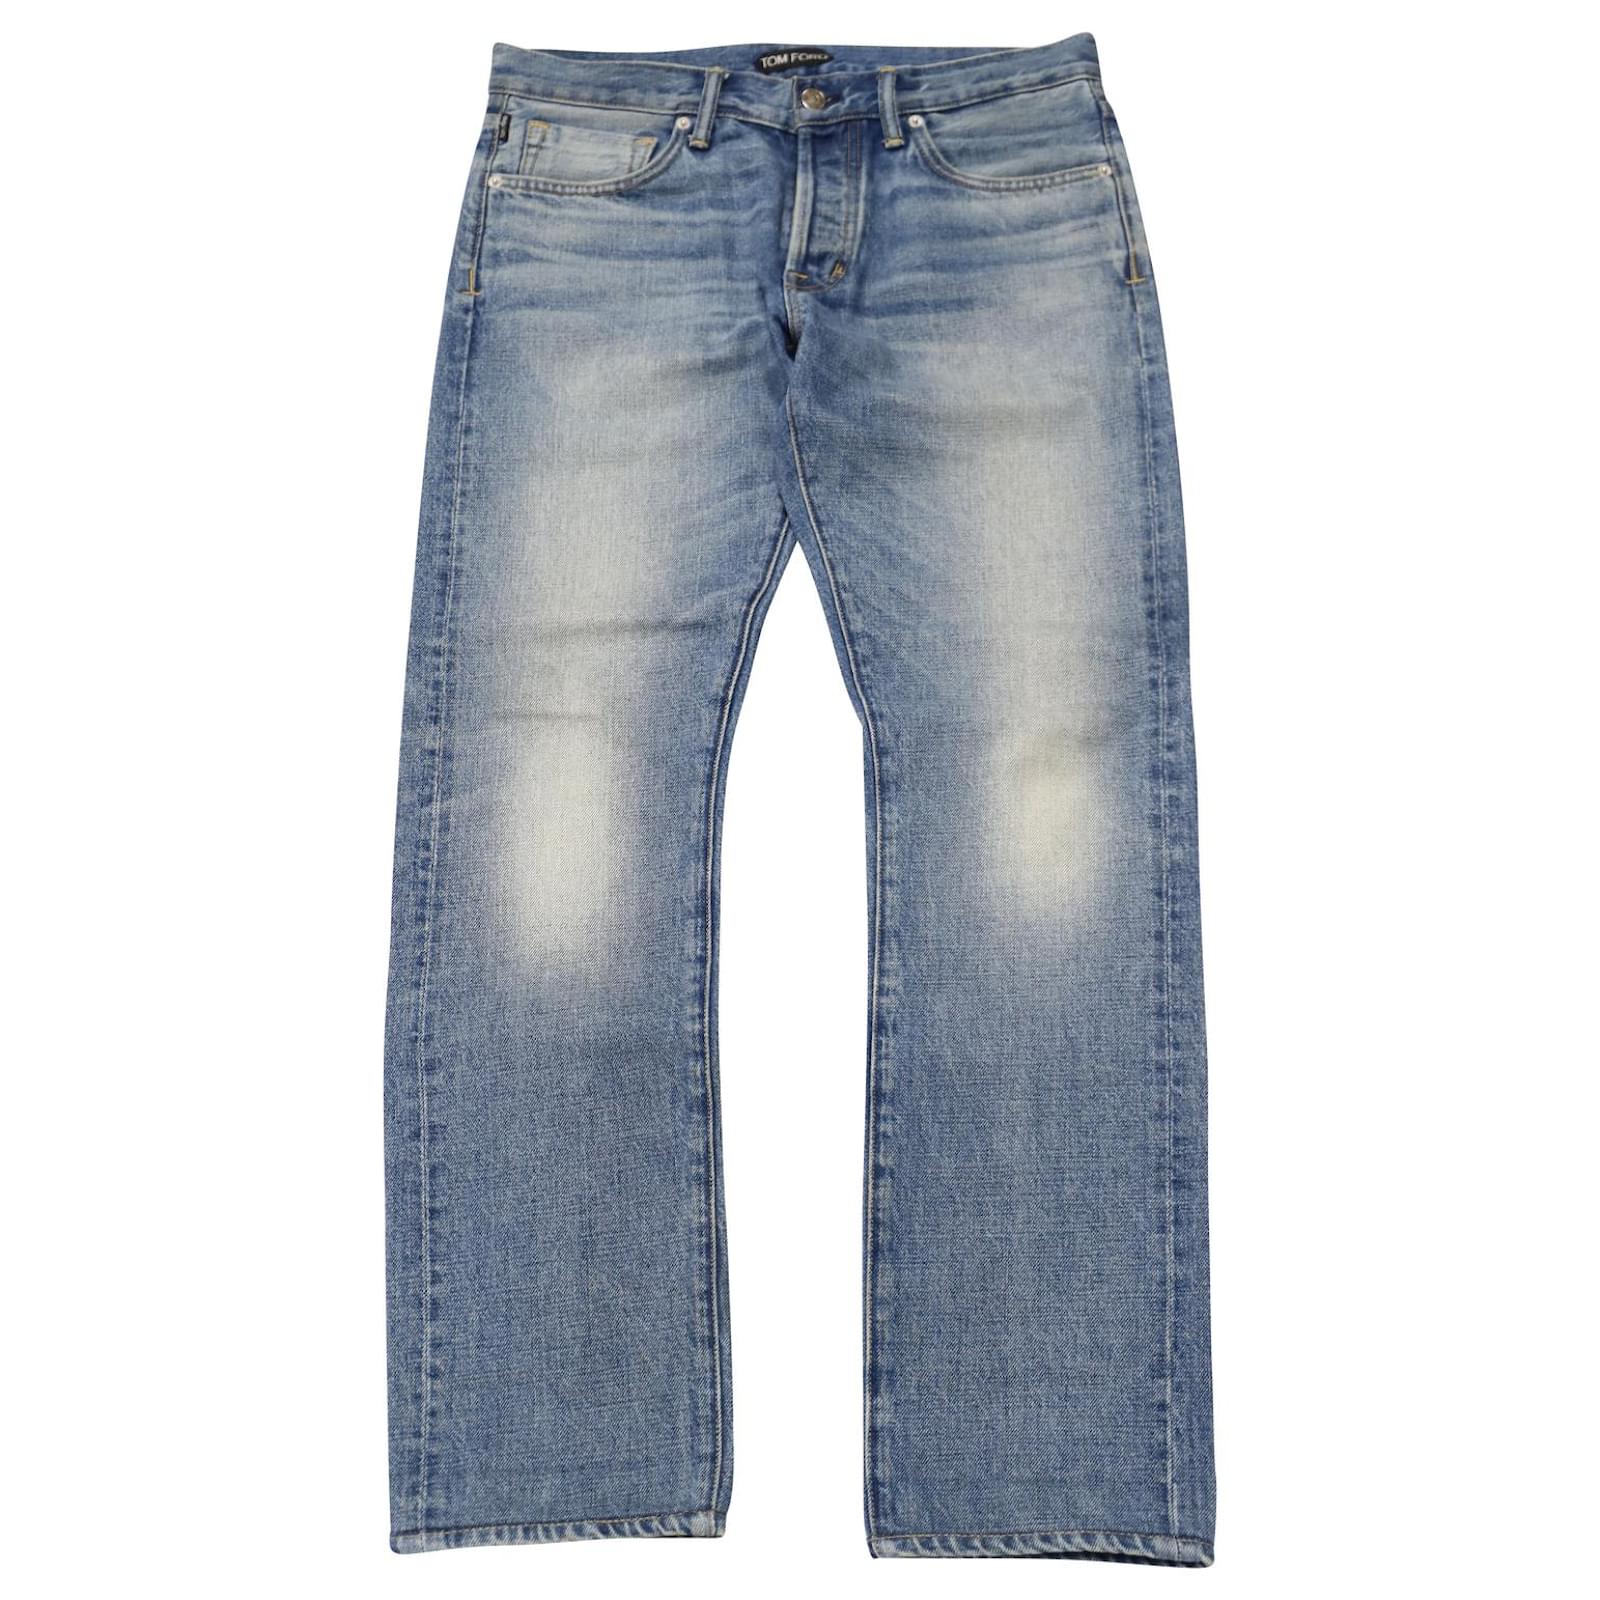 Tom Ford Men's Slim-Fit Selvedge Jeans